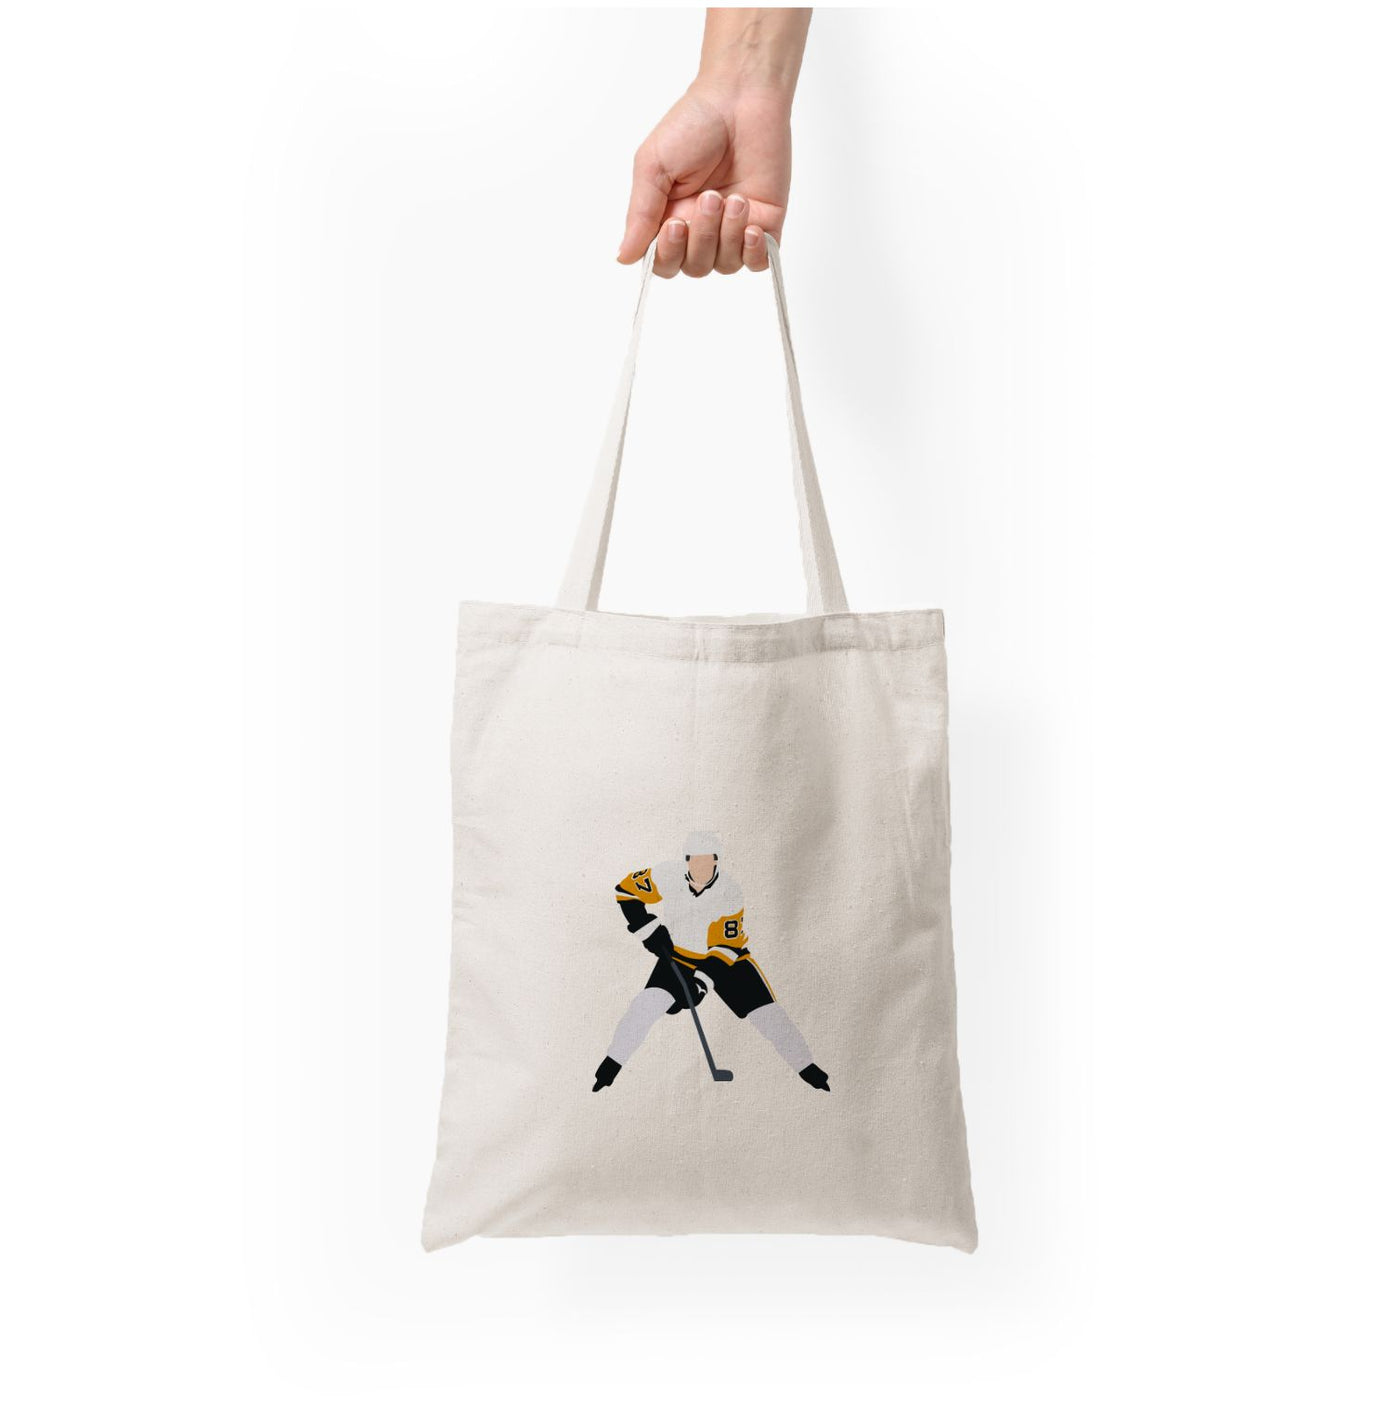 Sidney Crosby - NHL Tote Bag